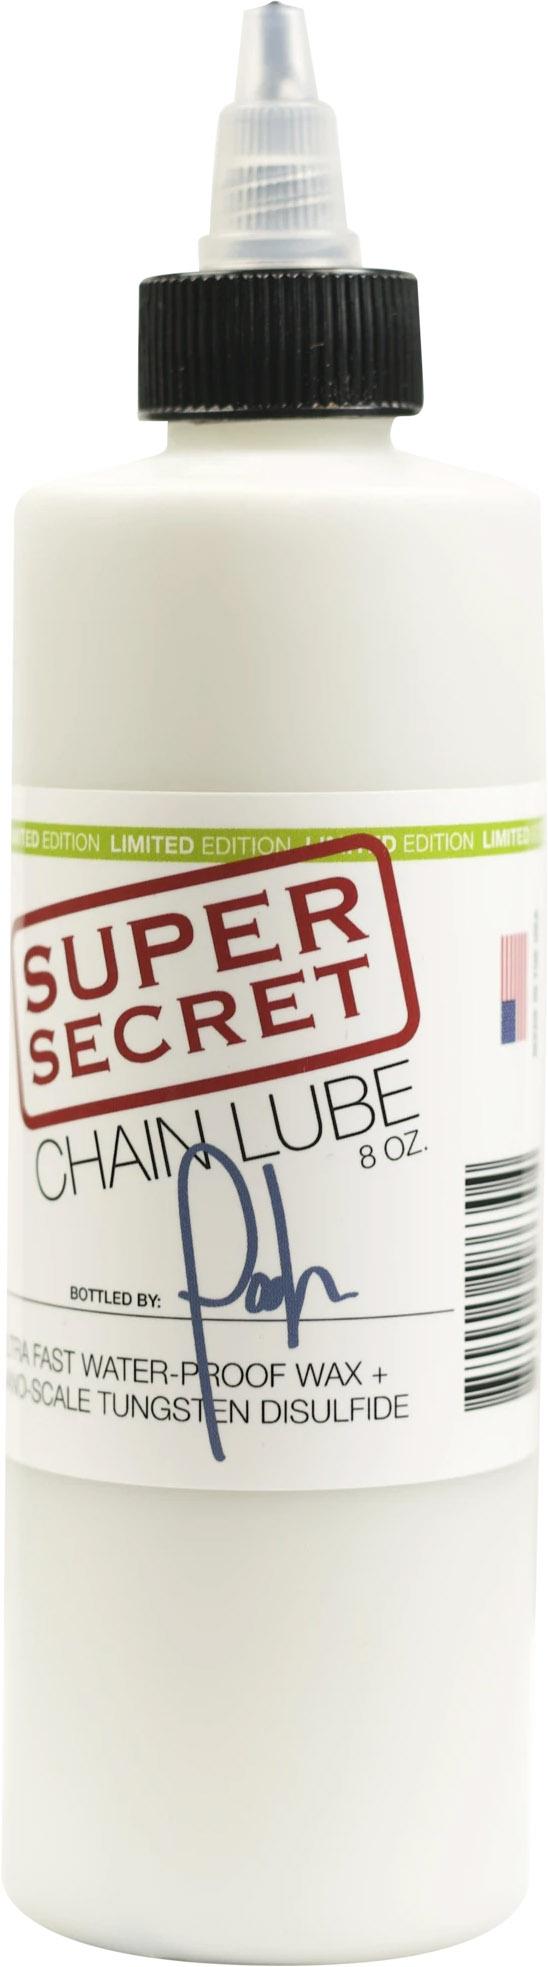 Silca Super Secret Chain Lube - 8oz Bottle - Neutral